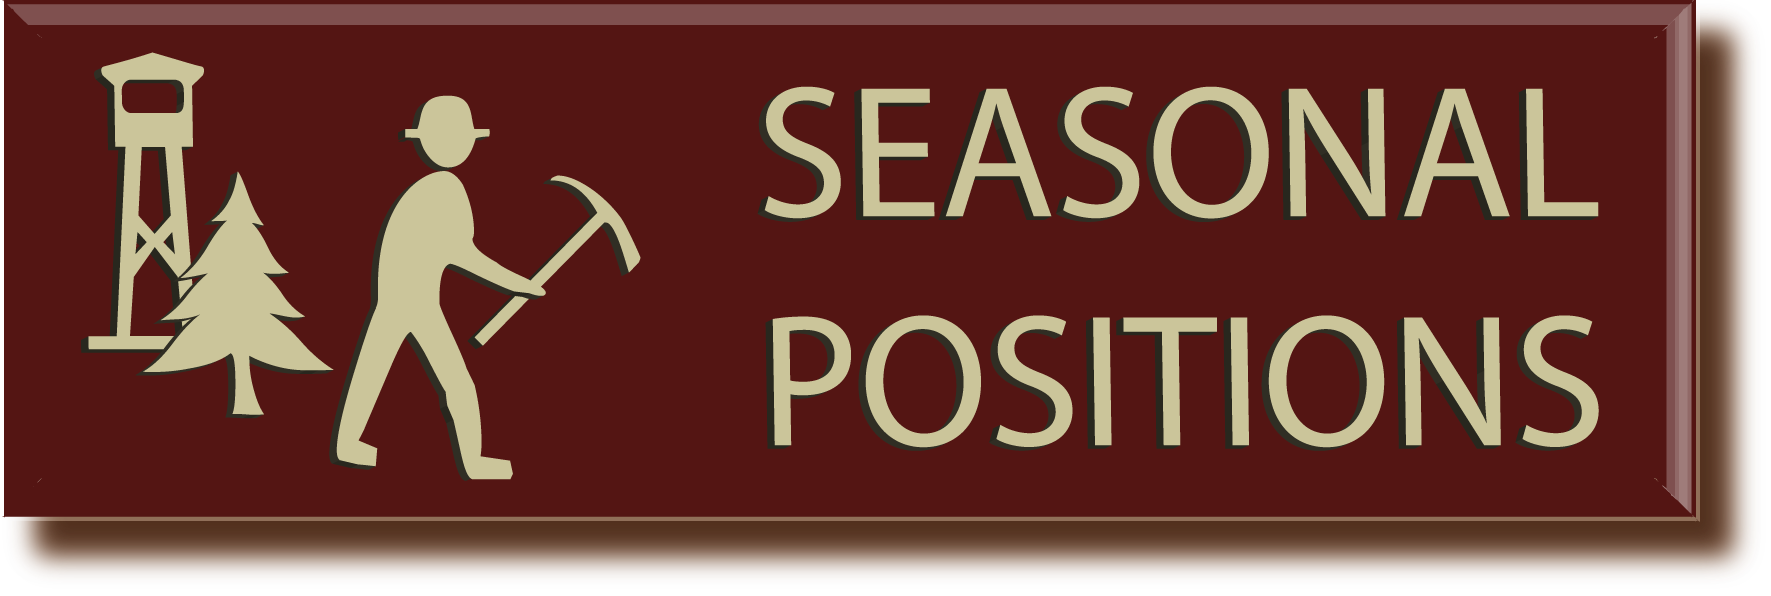 Seasonal Positions